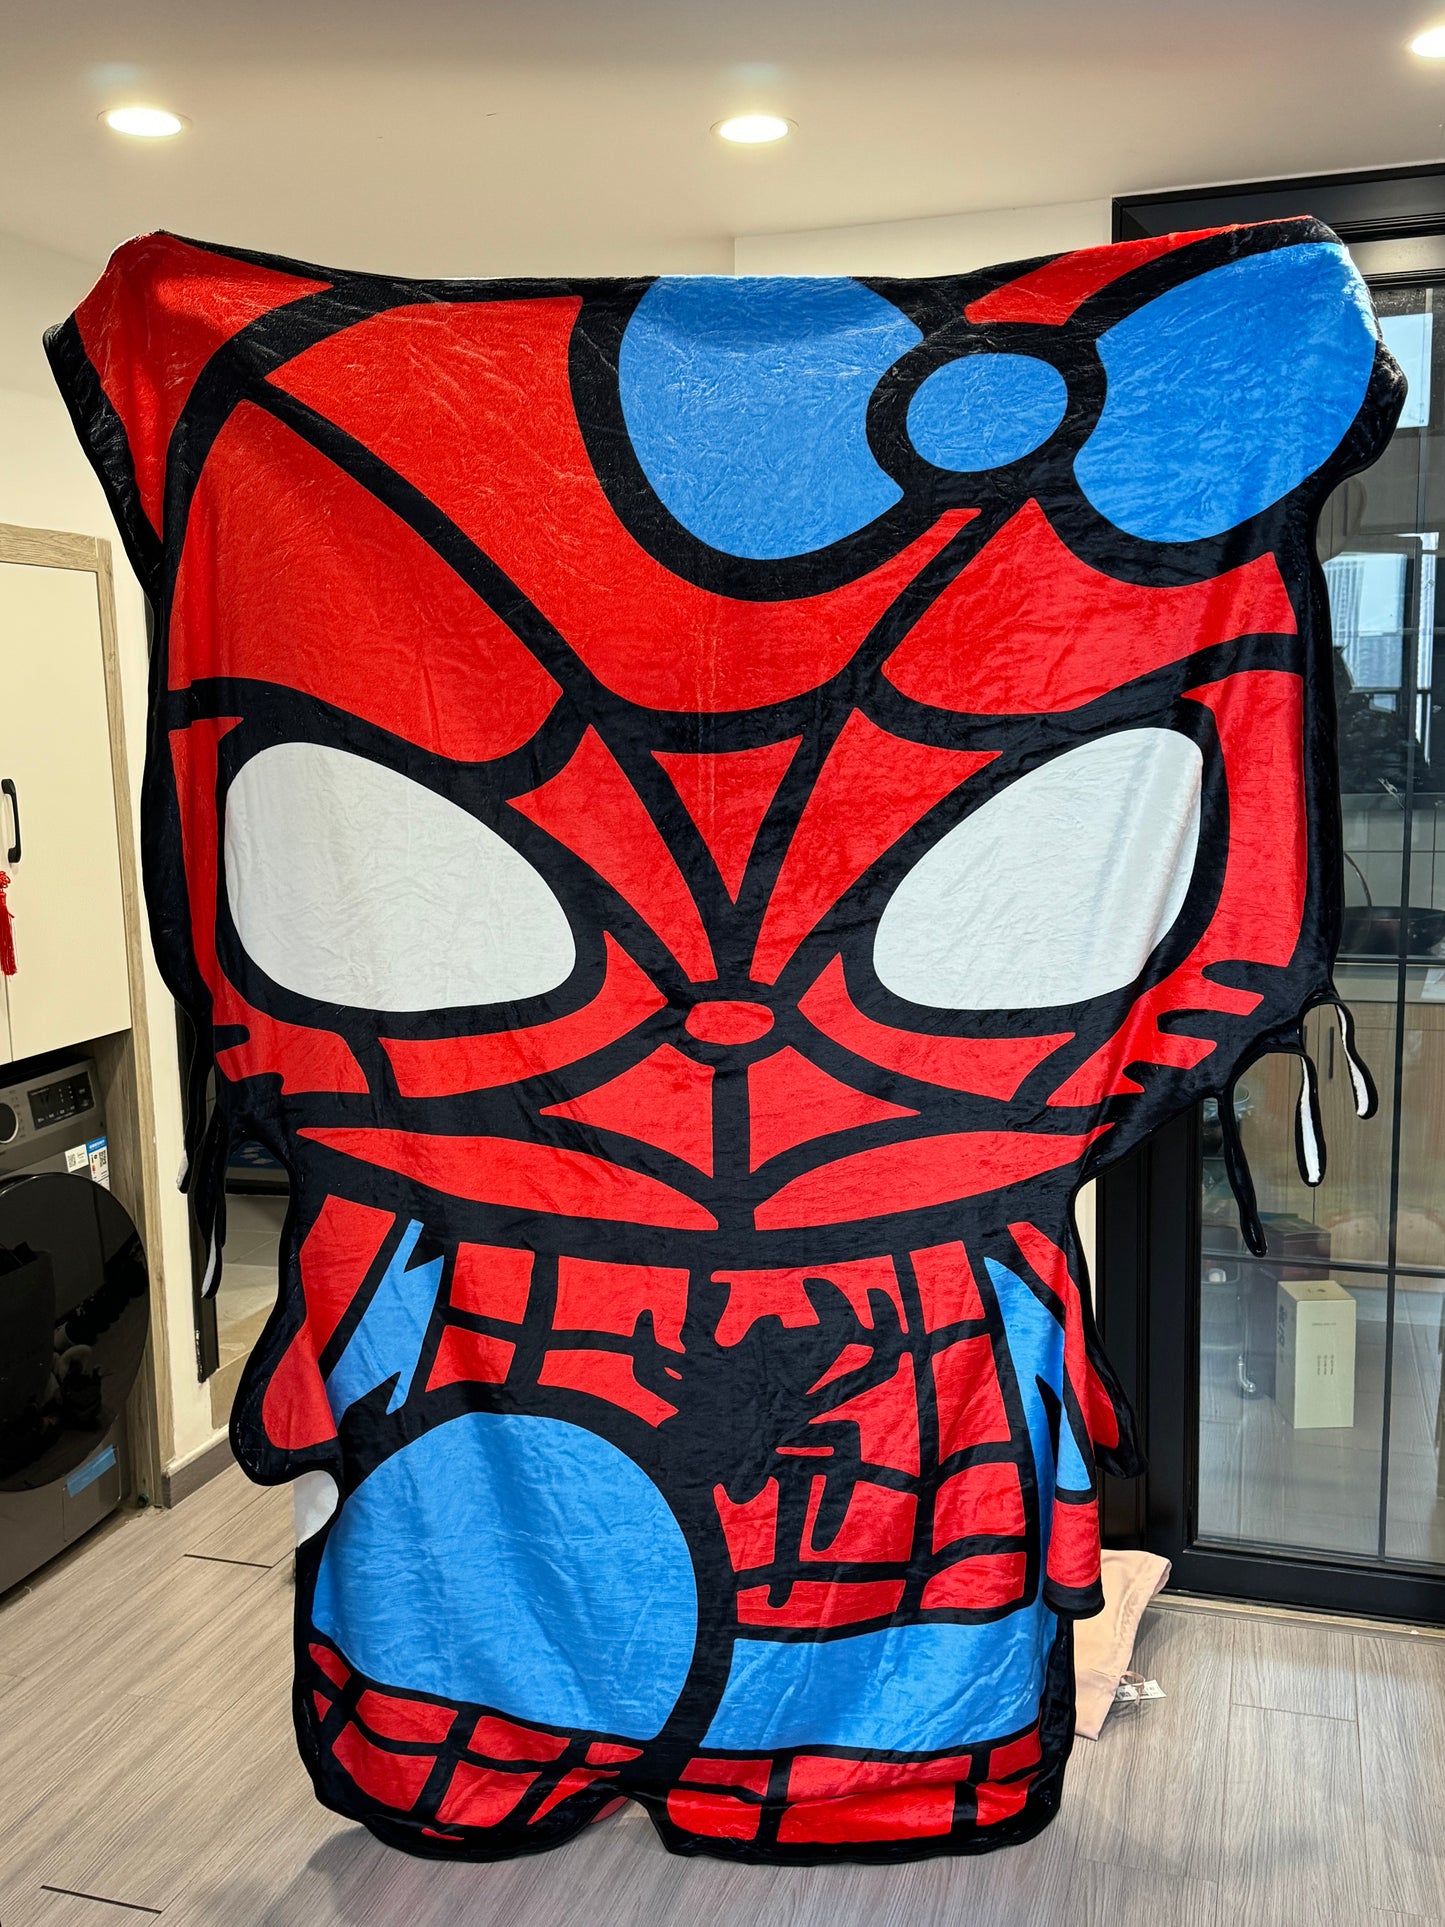 KT x Spiderman Shape Blanket Flannel Throw Blanket Cute Blanket Lightweight Super Soft Cozy for Bed Kids Adult Valentine Gift